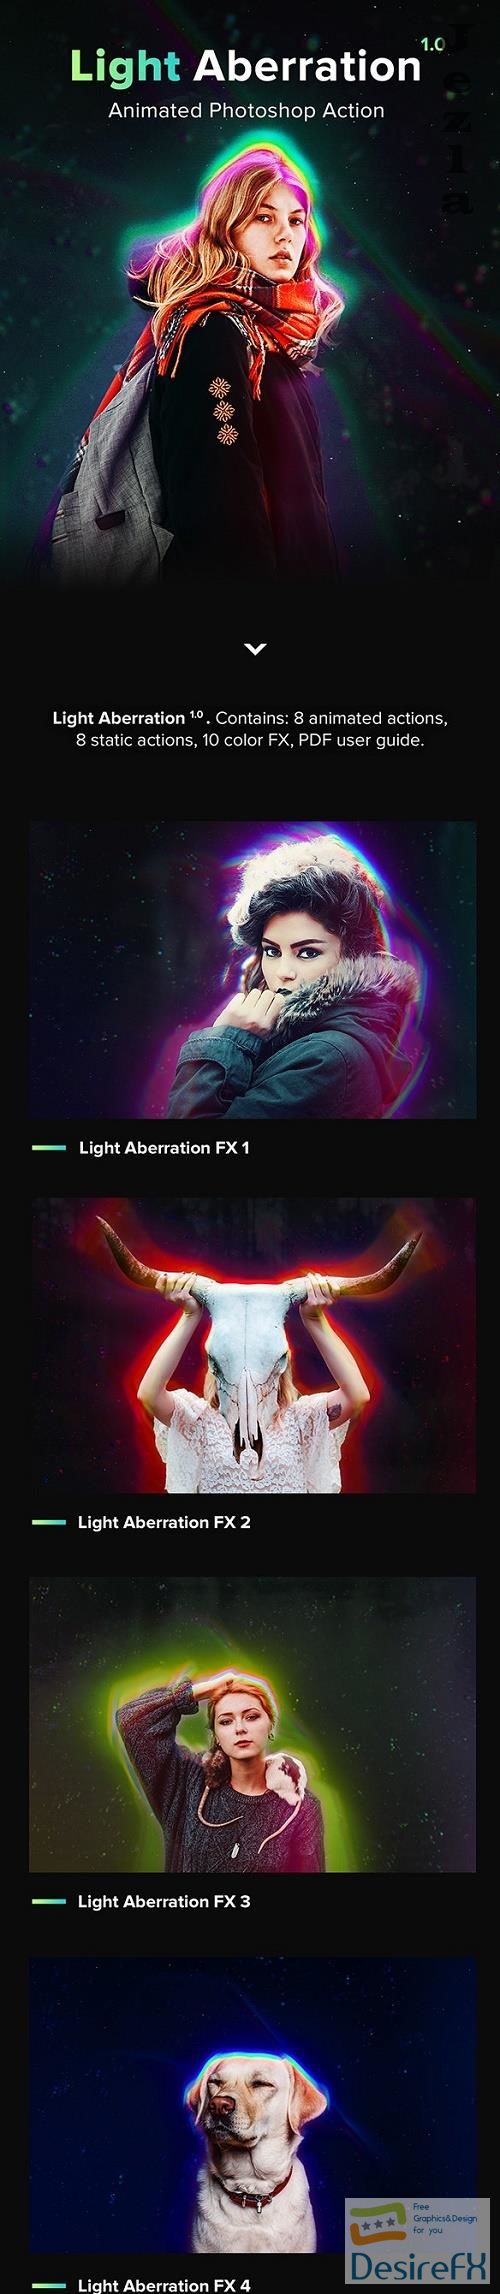 Download Animated Light Aberration - Photoshop Action 22505480 -  